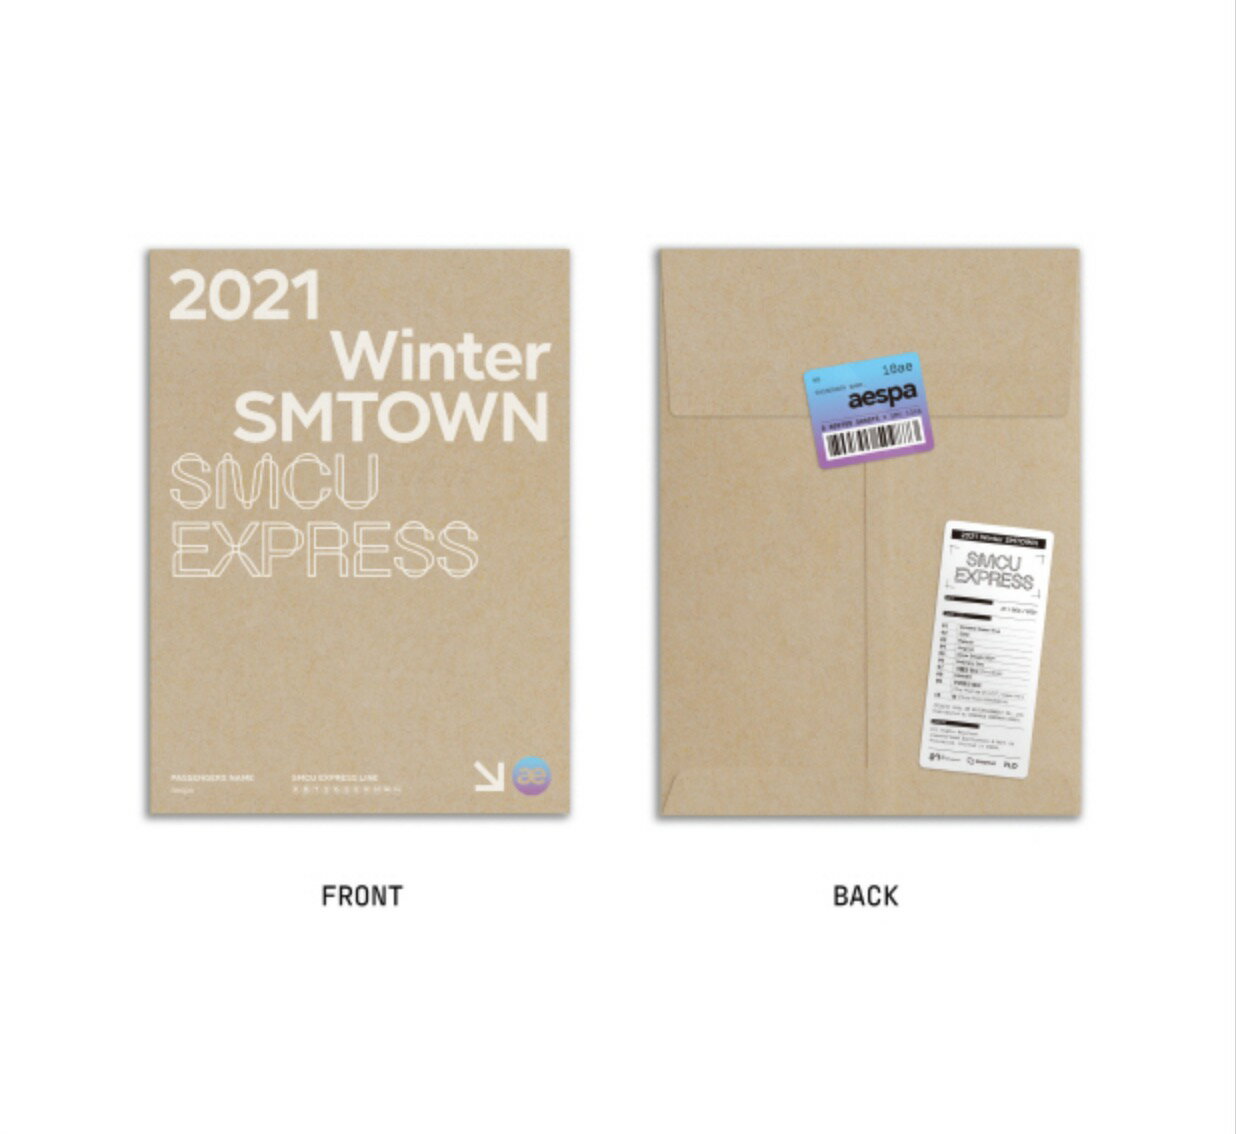 Aespa - 2021 Winter SMTOWN : SMCU EXPRESS Aespa Ver CD 韓国盤 公式 アルバム エスパ